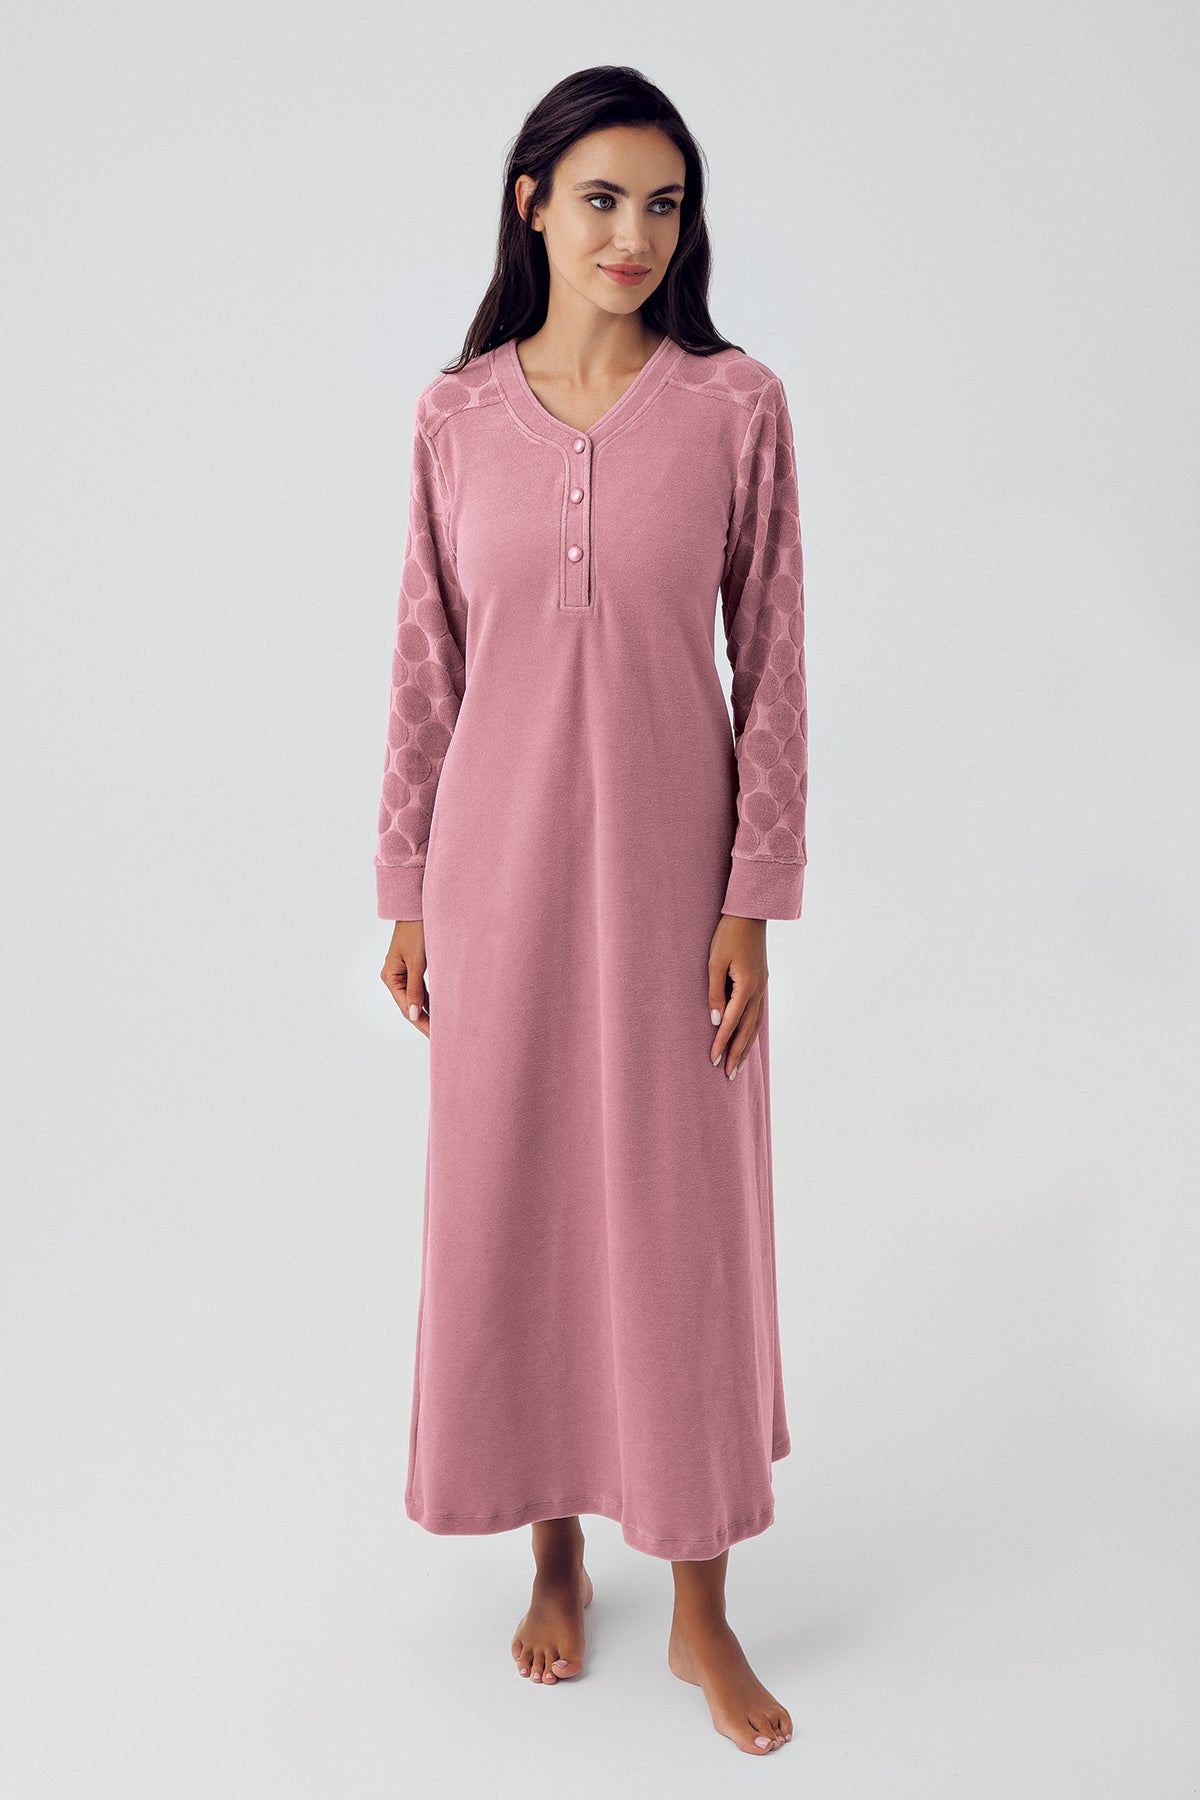 Terry Jacquard Maternity & Nursing Nightgown Dried Rose - 15101